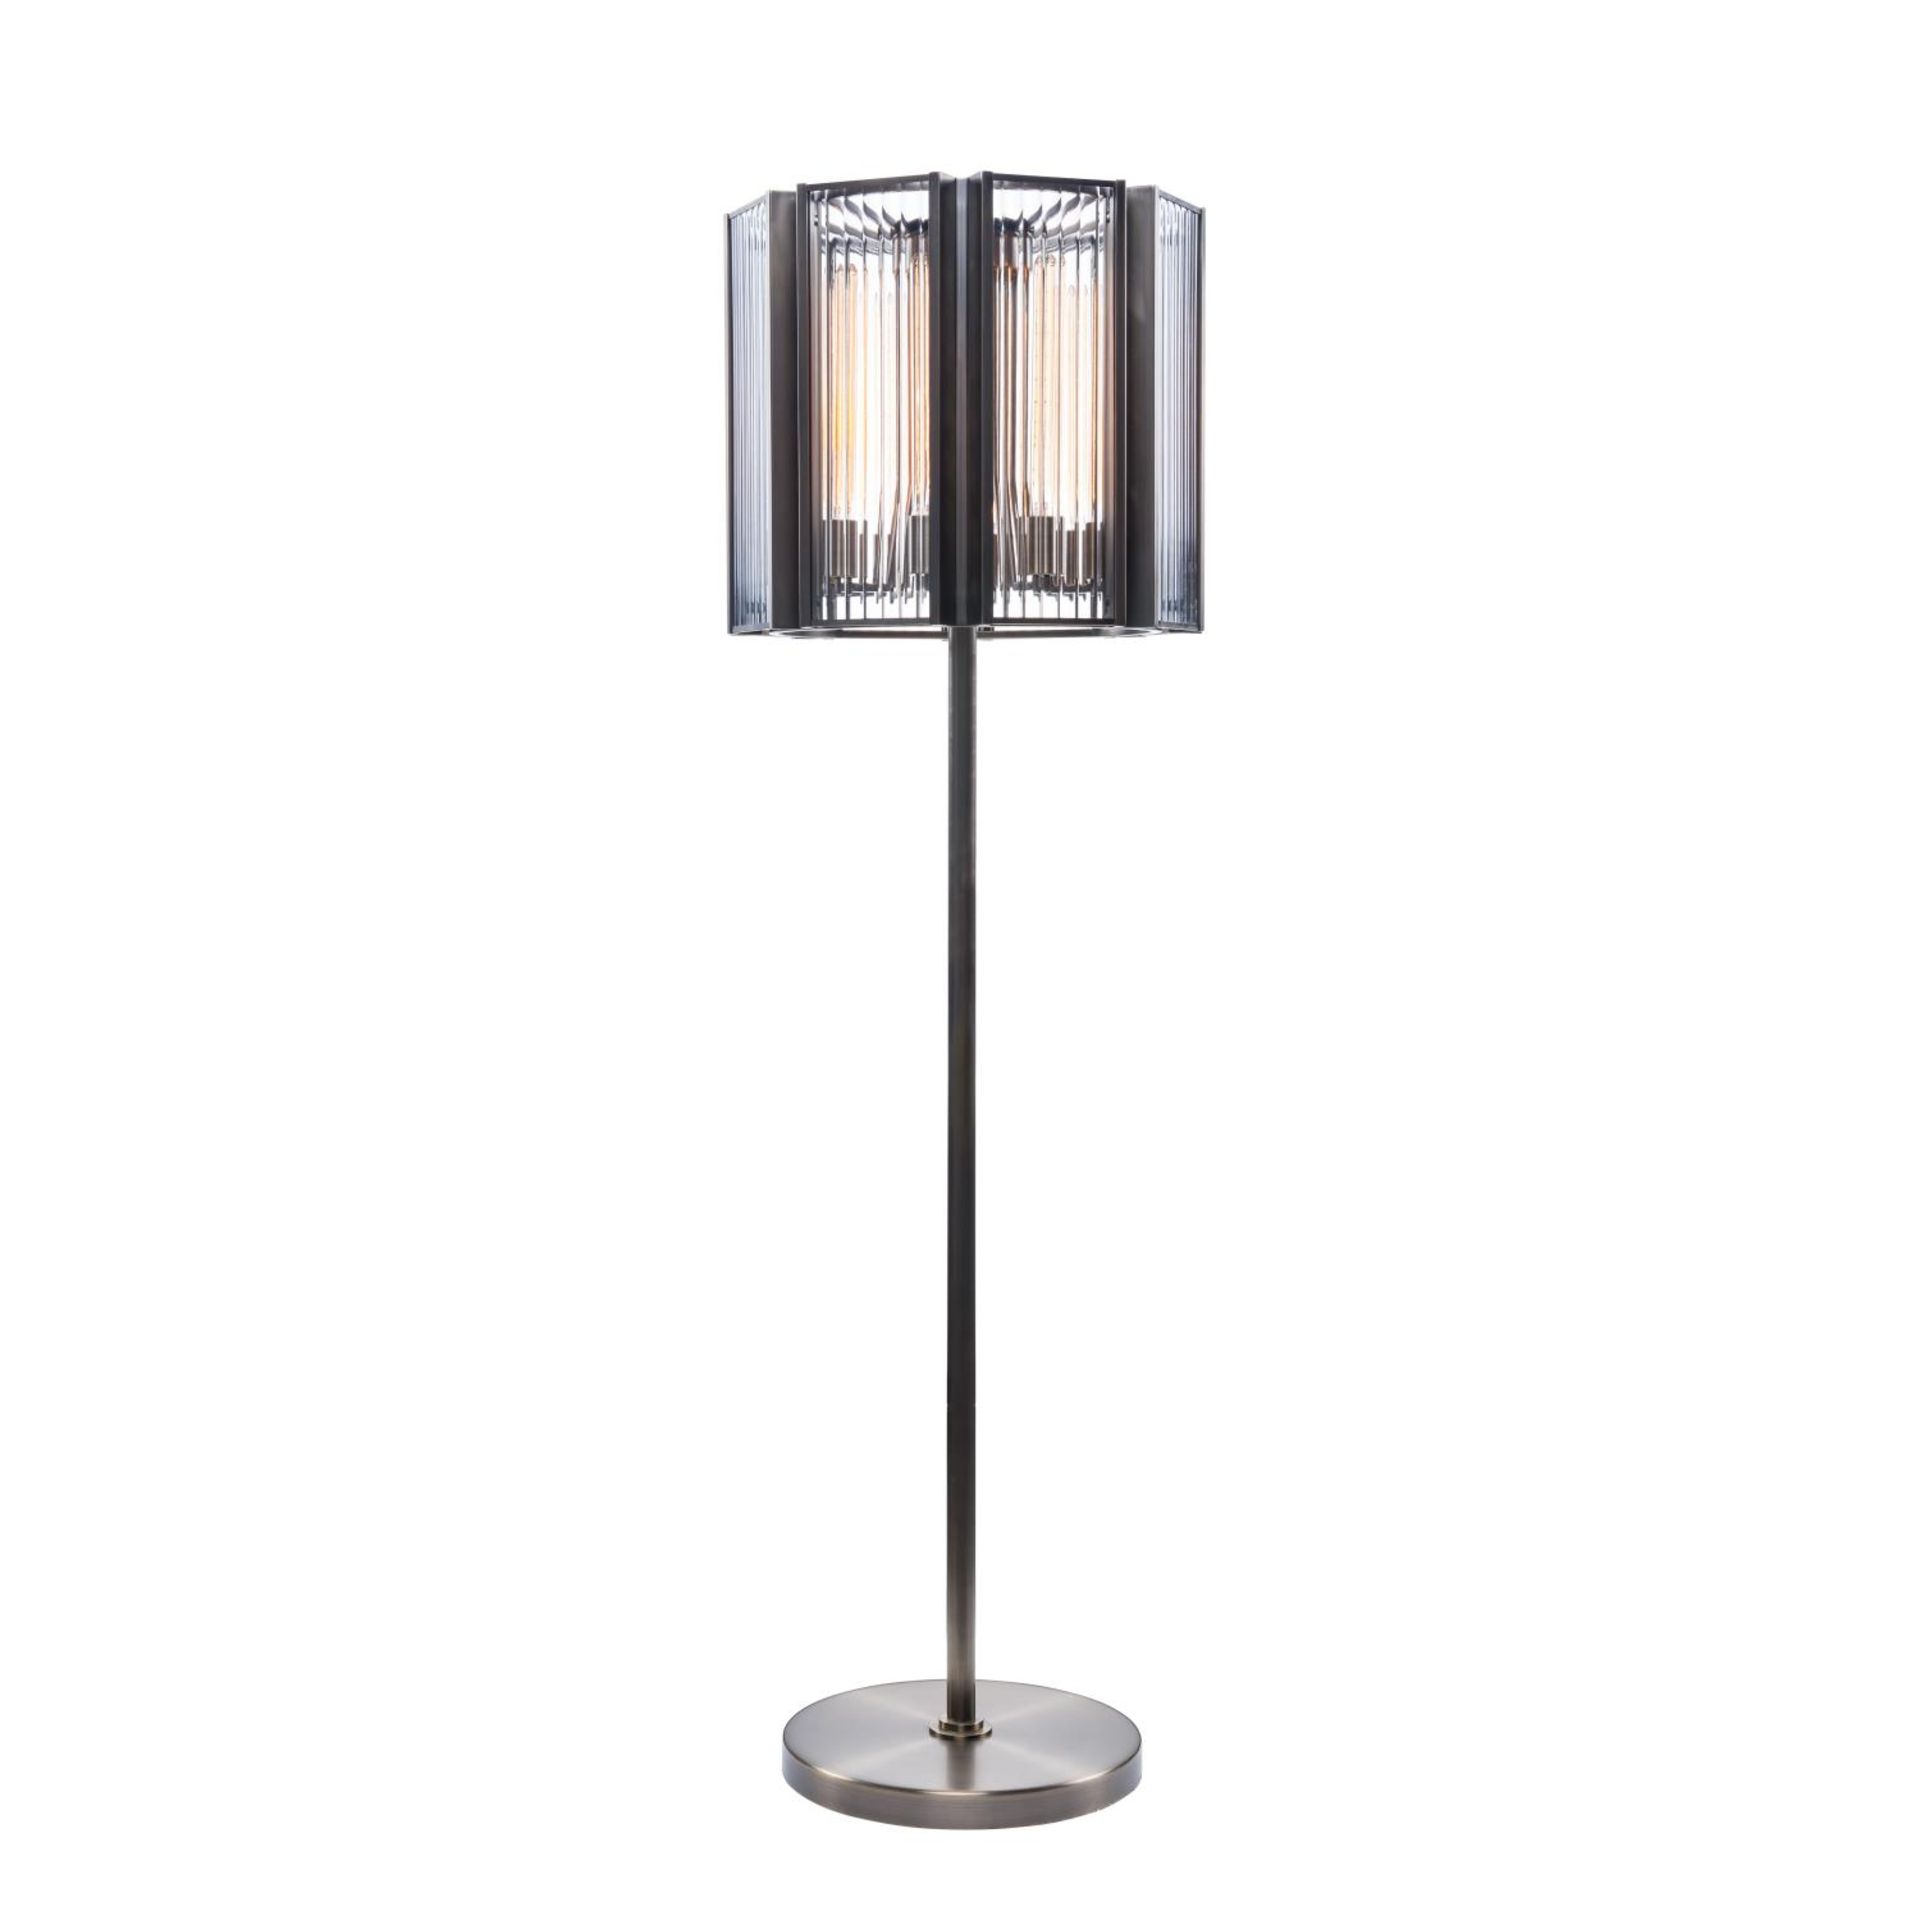 AN ELIXIR FLOOR LAMP - FLAT BRASS 52cm x 52cm x 170cm (rrp £1530)